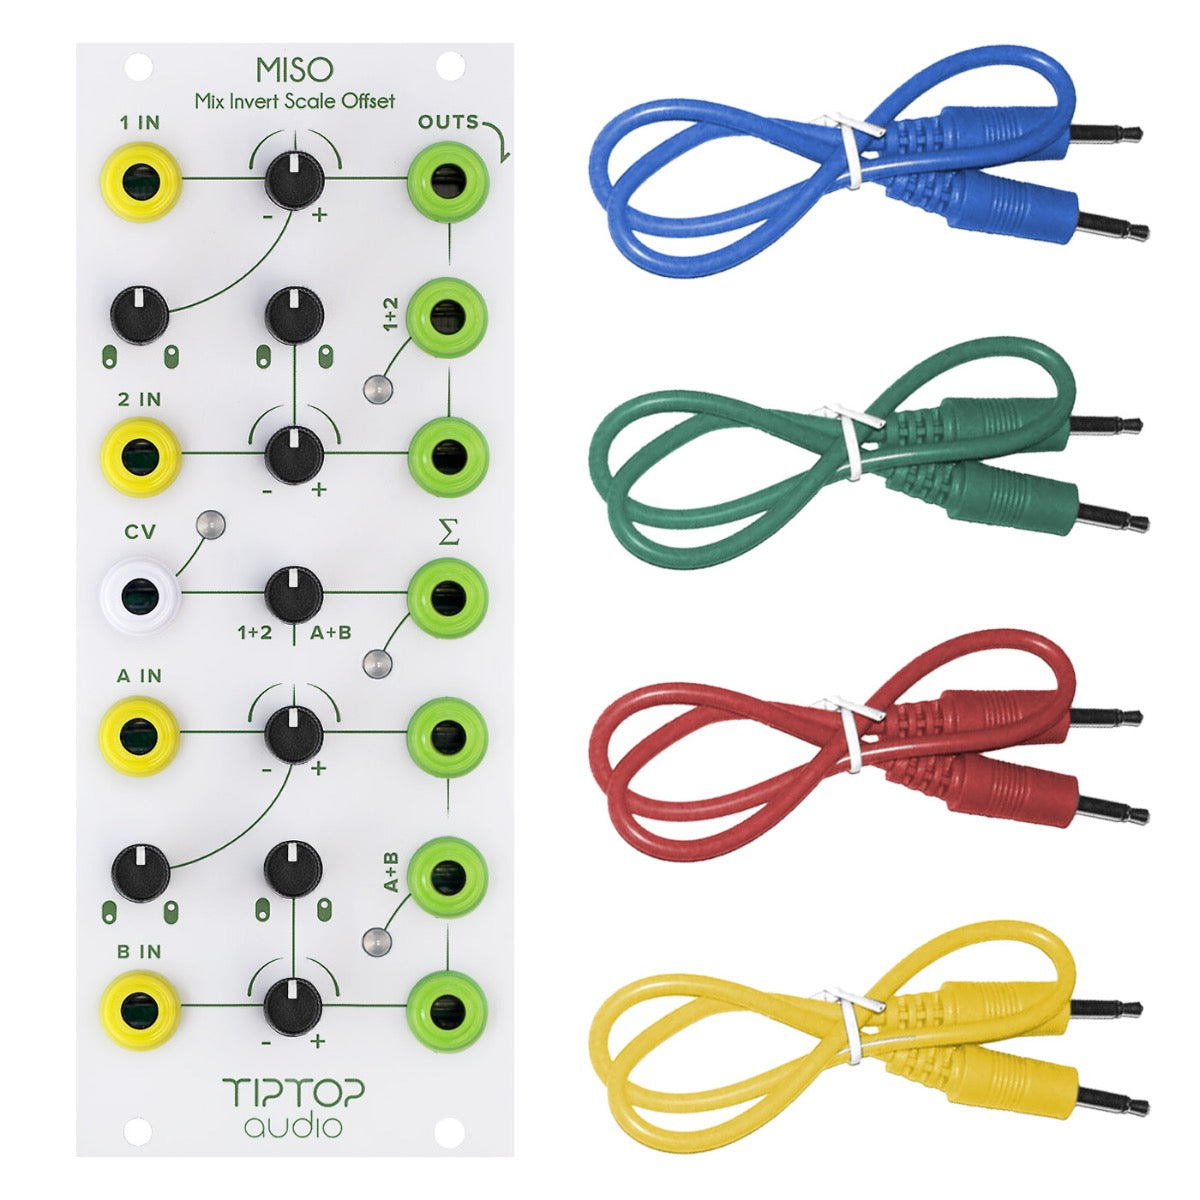 Tiptop Audio MISO Mix, Invert, Scale, Offset Utility Module COLOR CABLE KIT